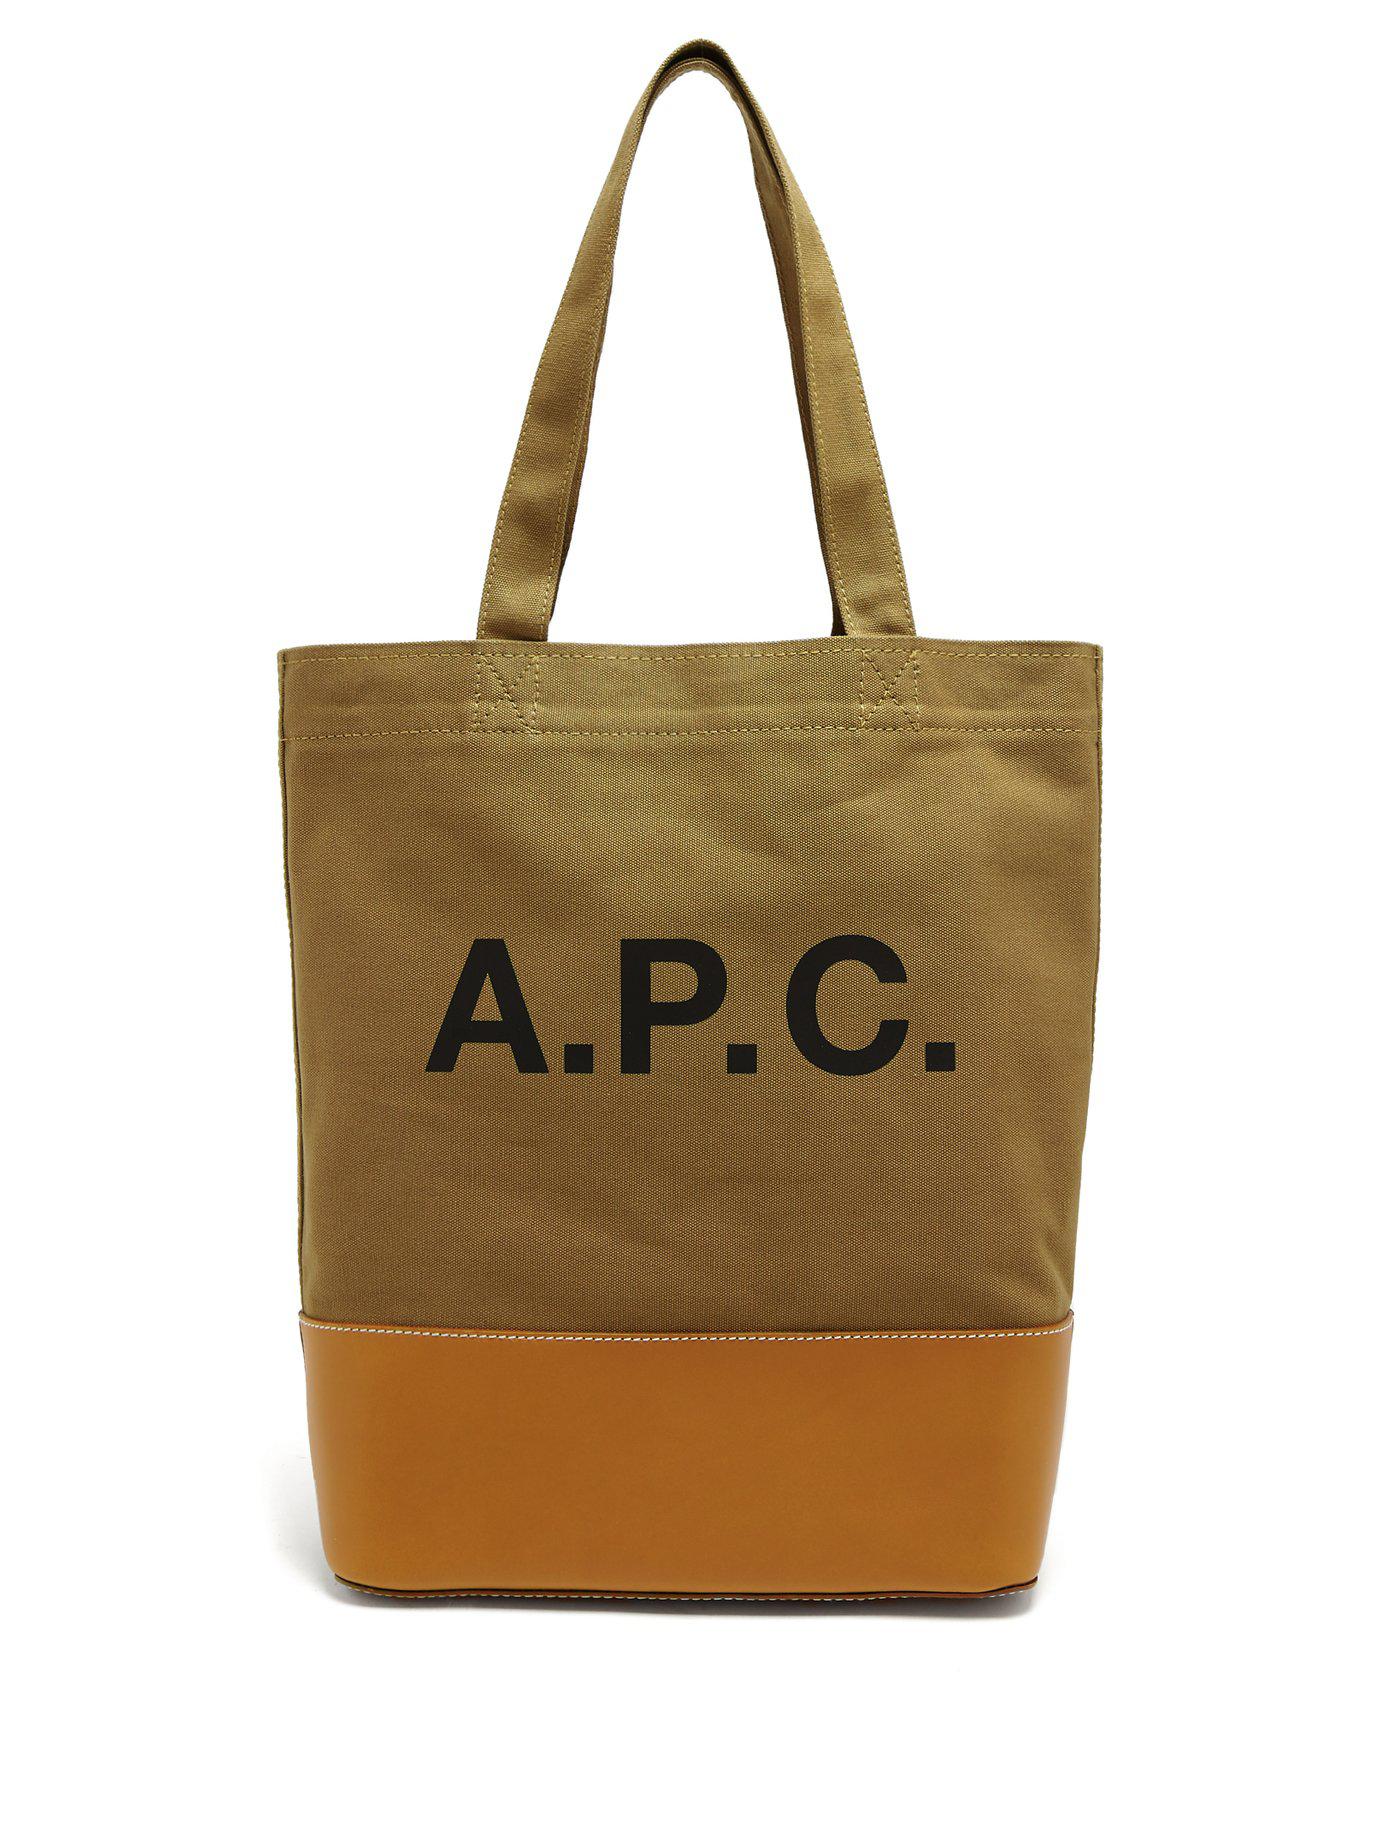 A.P.C. Contrast Panel Logo Print Canvas Tote Bag for Men - Lyst